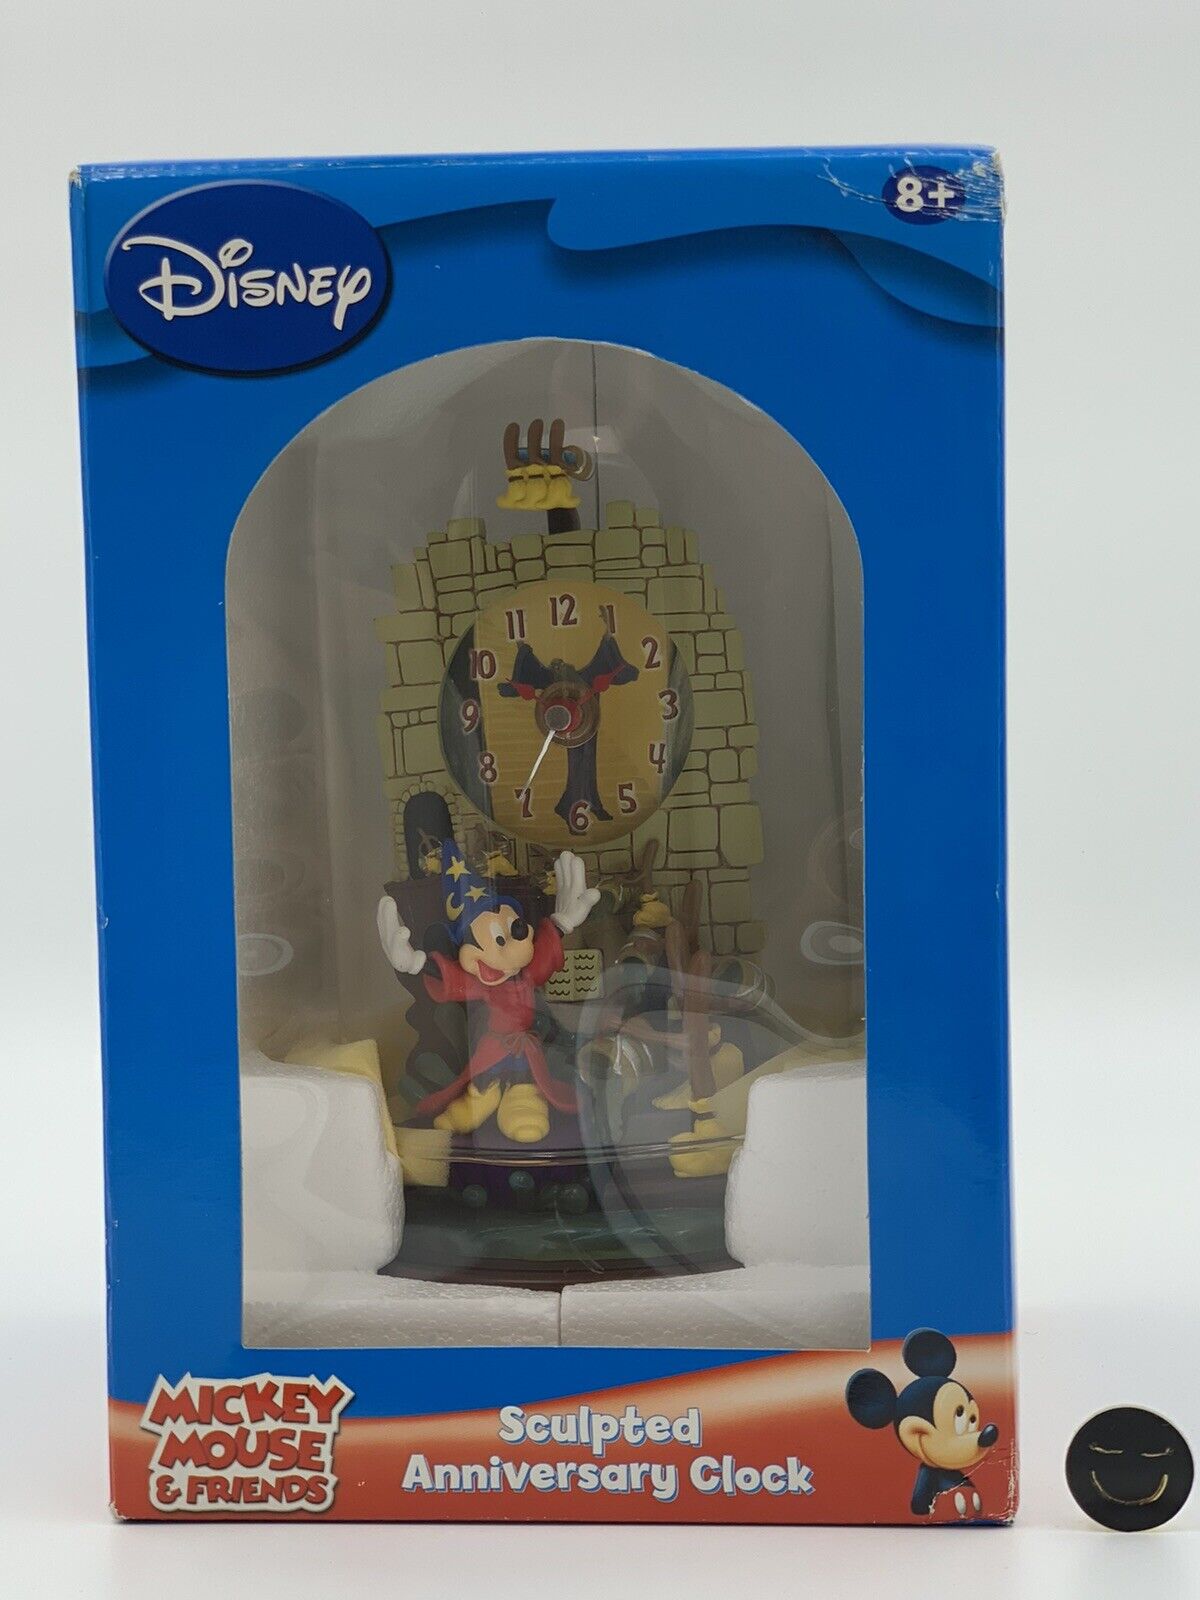 Disney Mickey Mouse & Friends FANTASIA Sculpted Anniversary Dual Pendulum Clock 